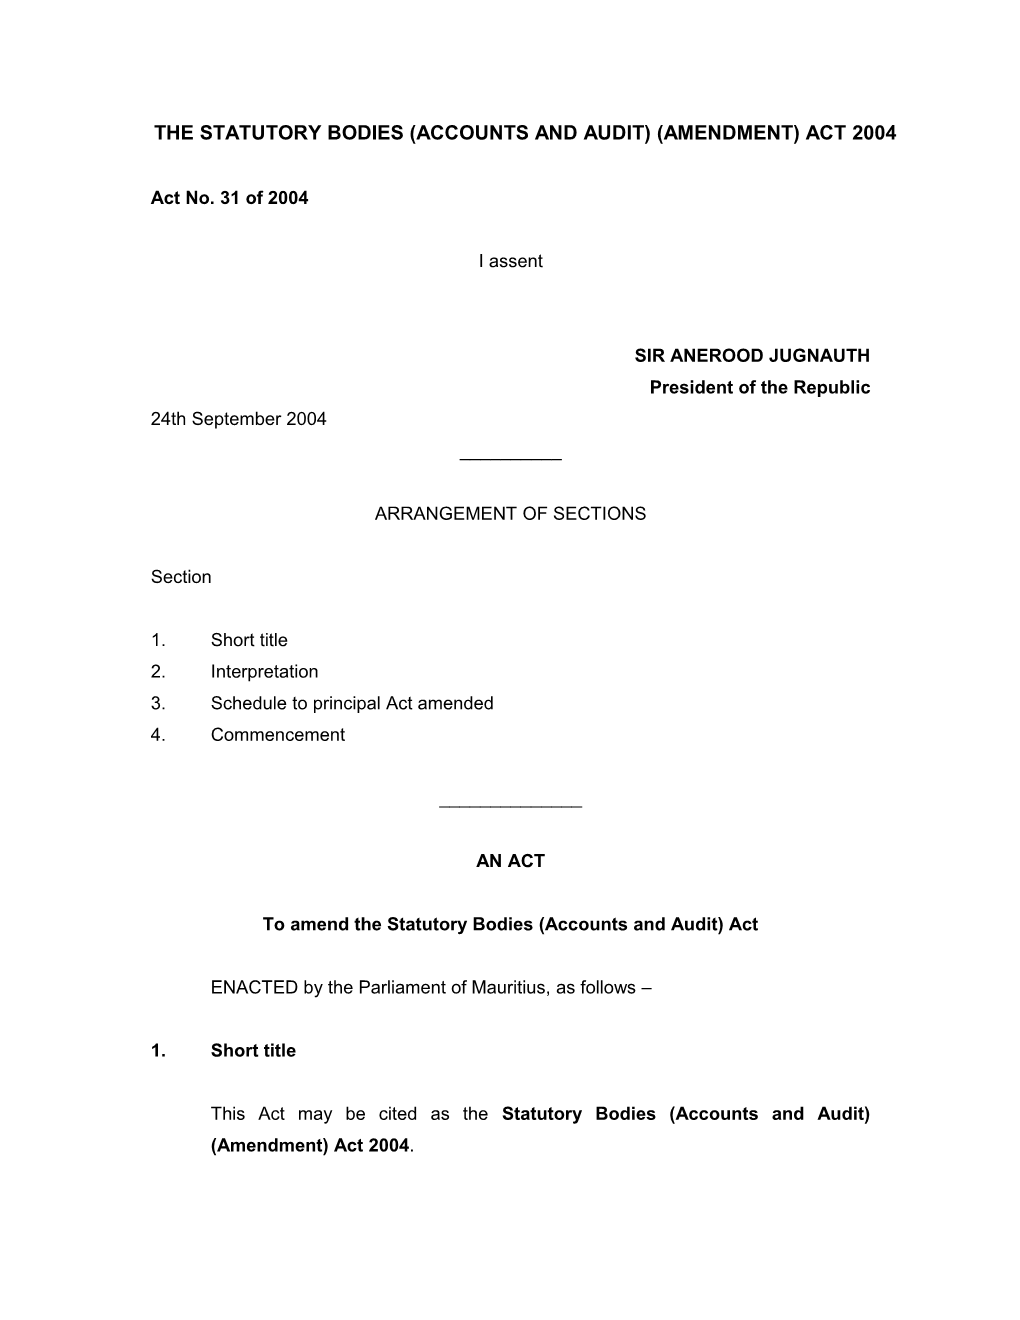 The Statutory Bodies (Accounts and Audit) (Amendment)